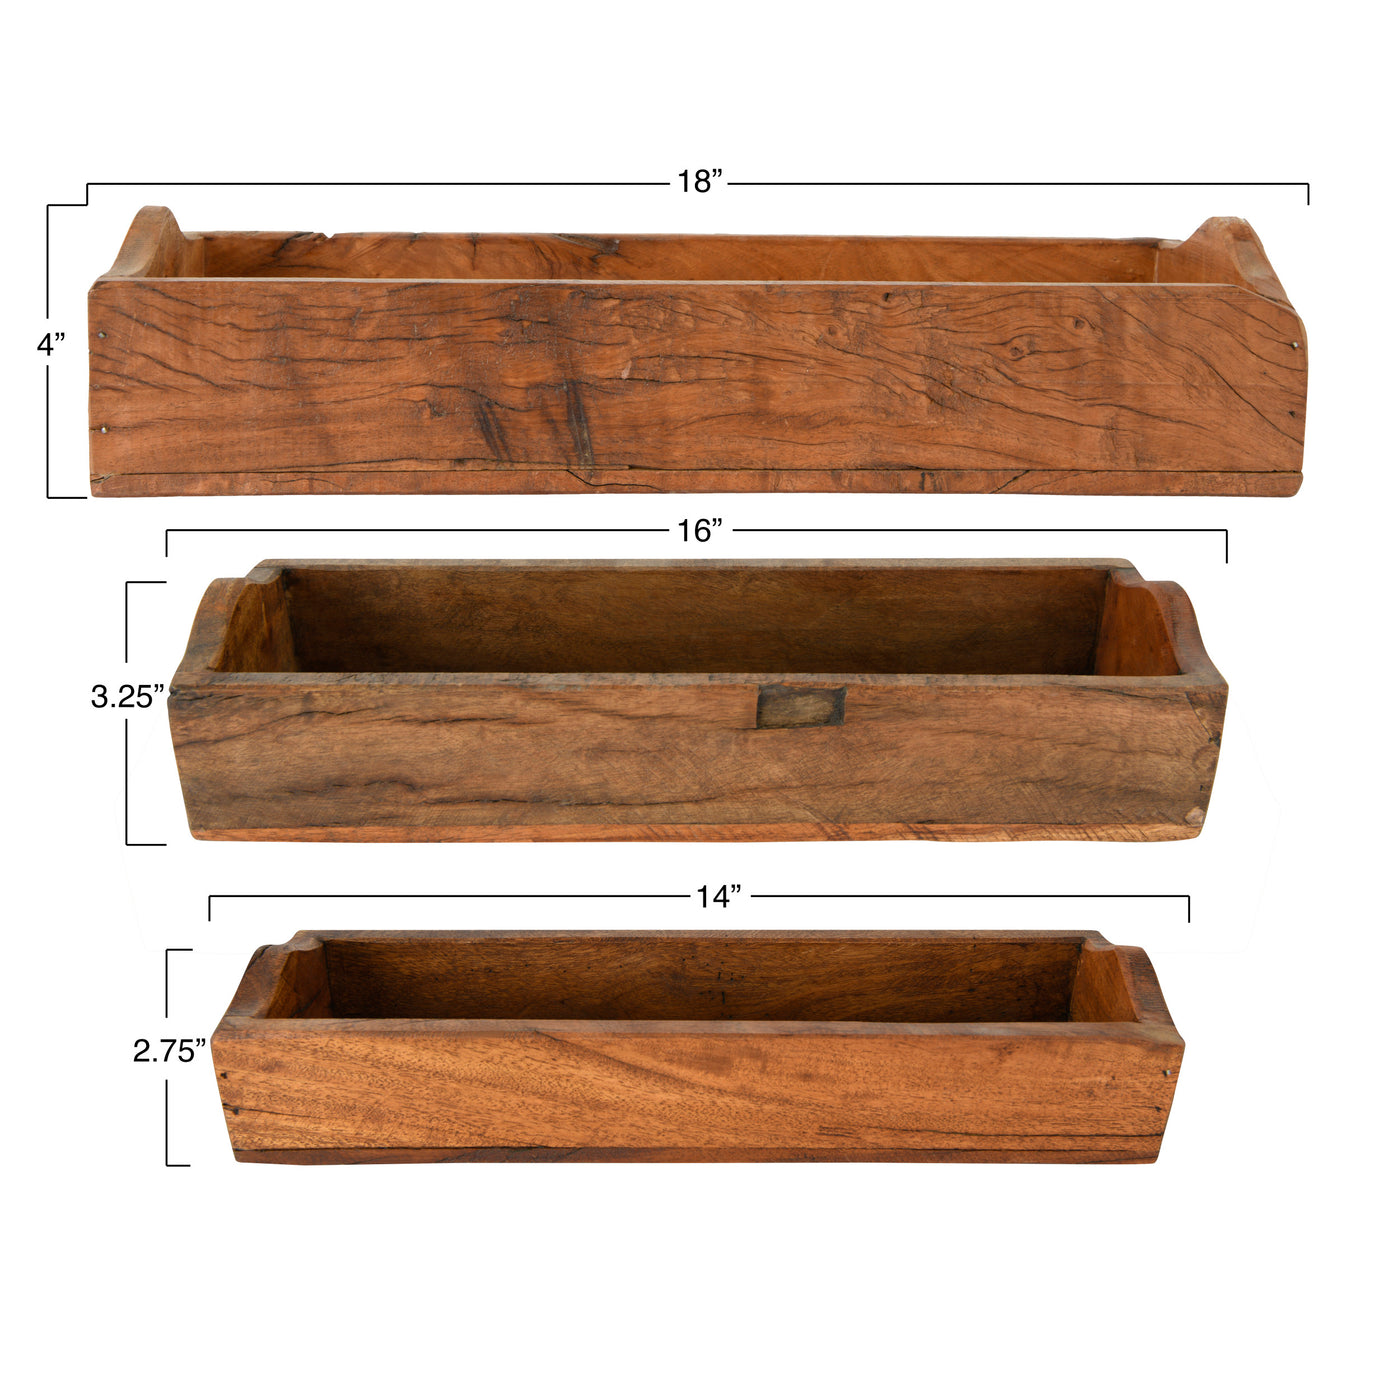 Wood Boxes, Set of 3